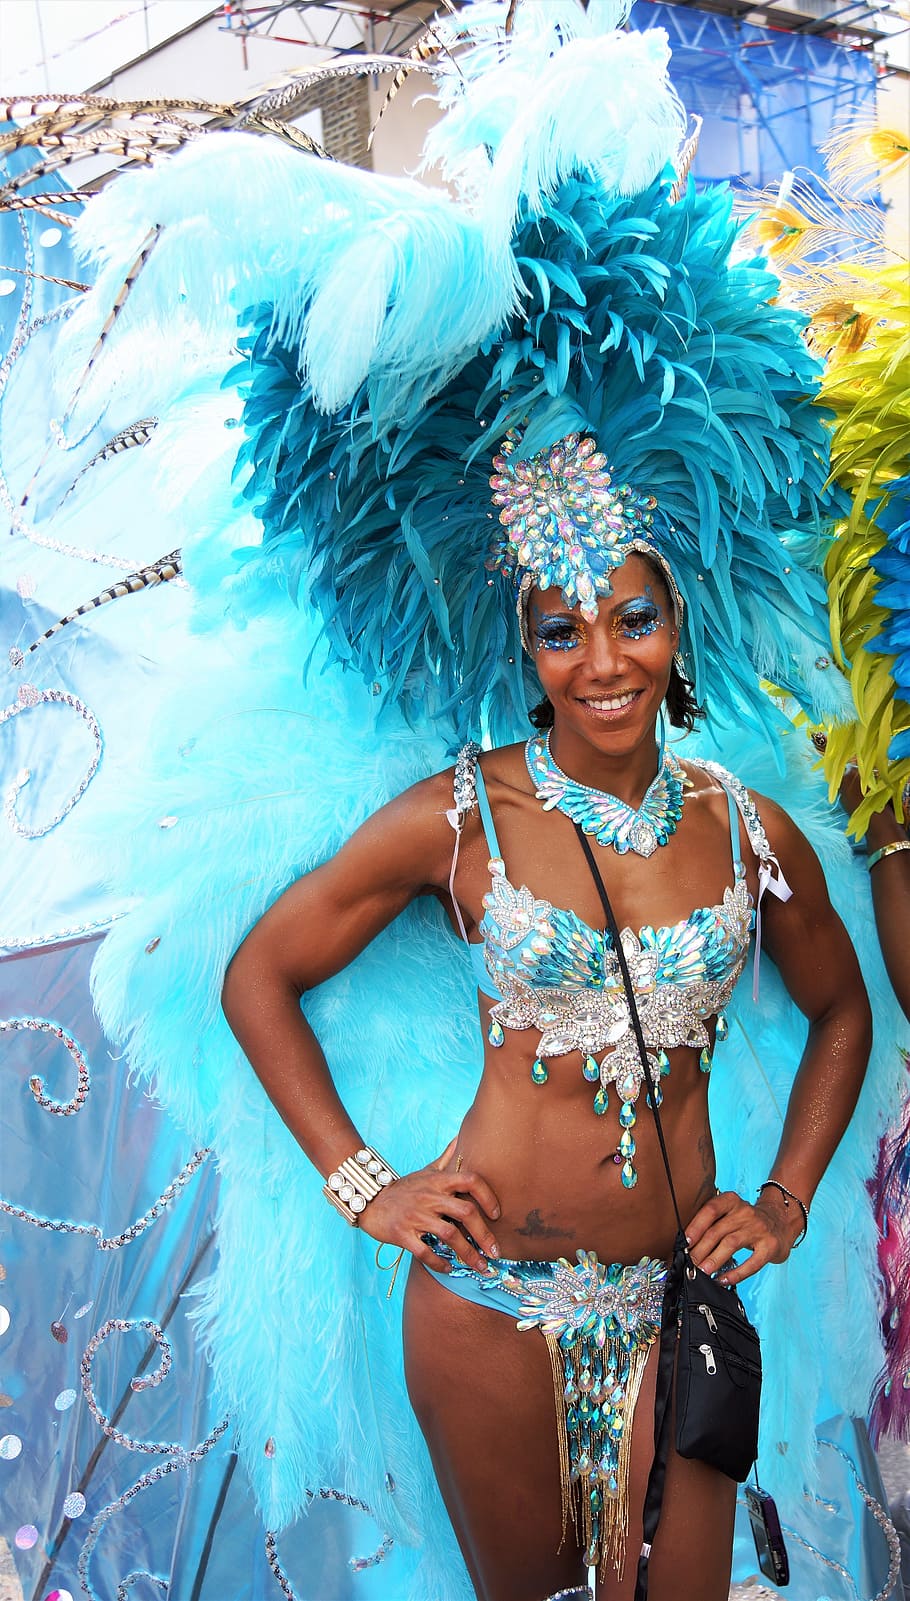 carnaval, sombrerería, disfraz, festival, notting hill, intérprete, desfile, baile, londres, ropa